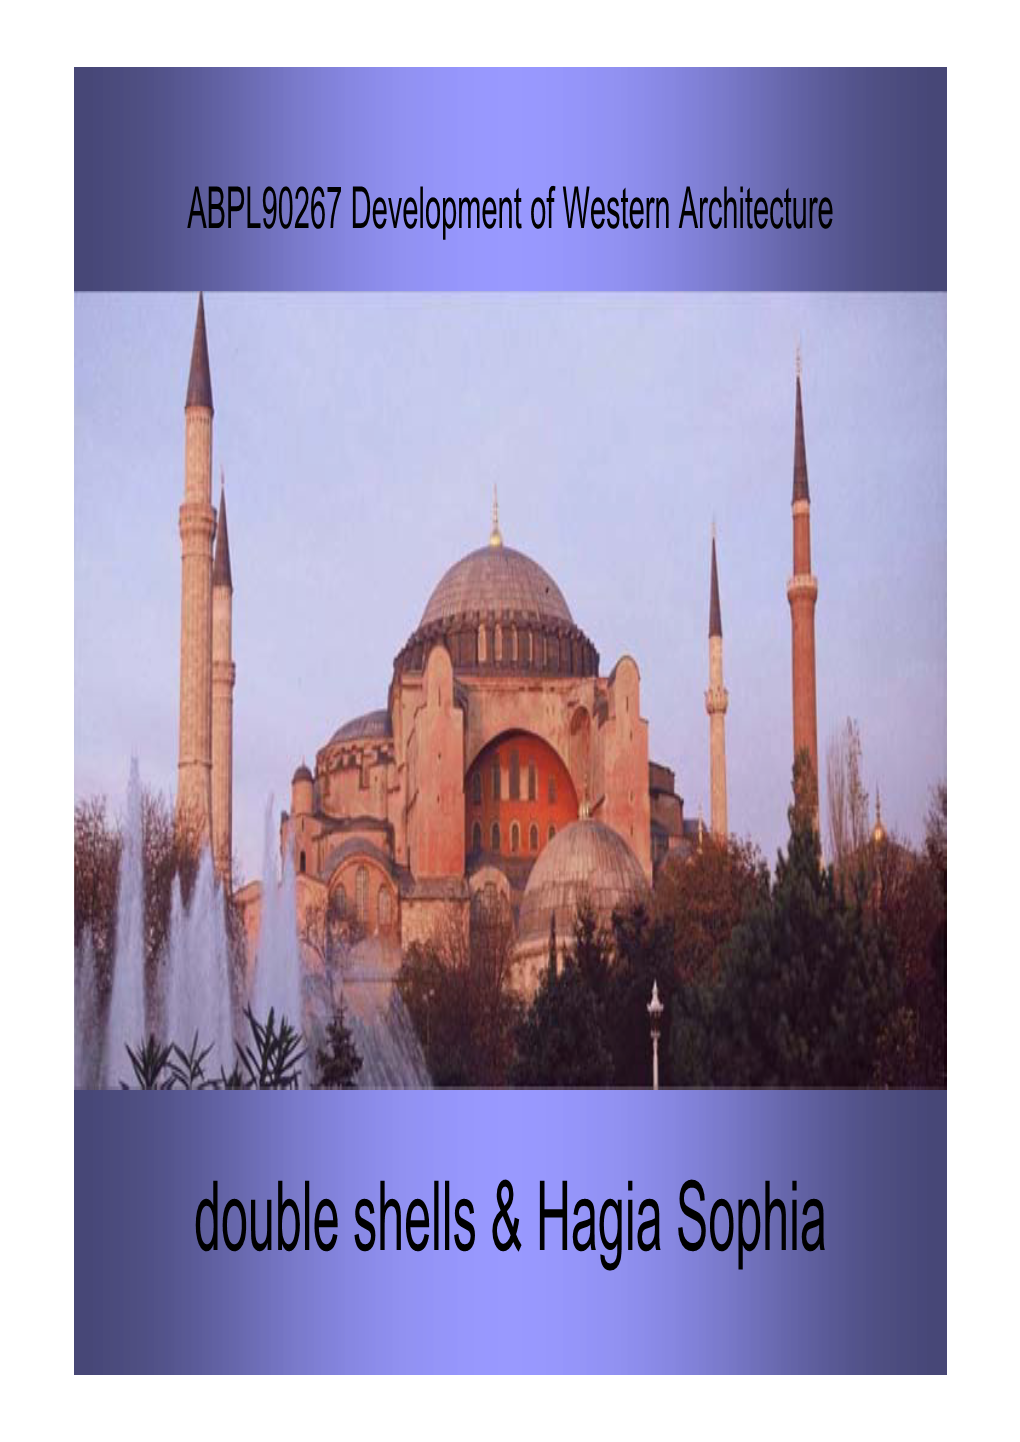 Double Shells & Hagia Sophia